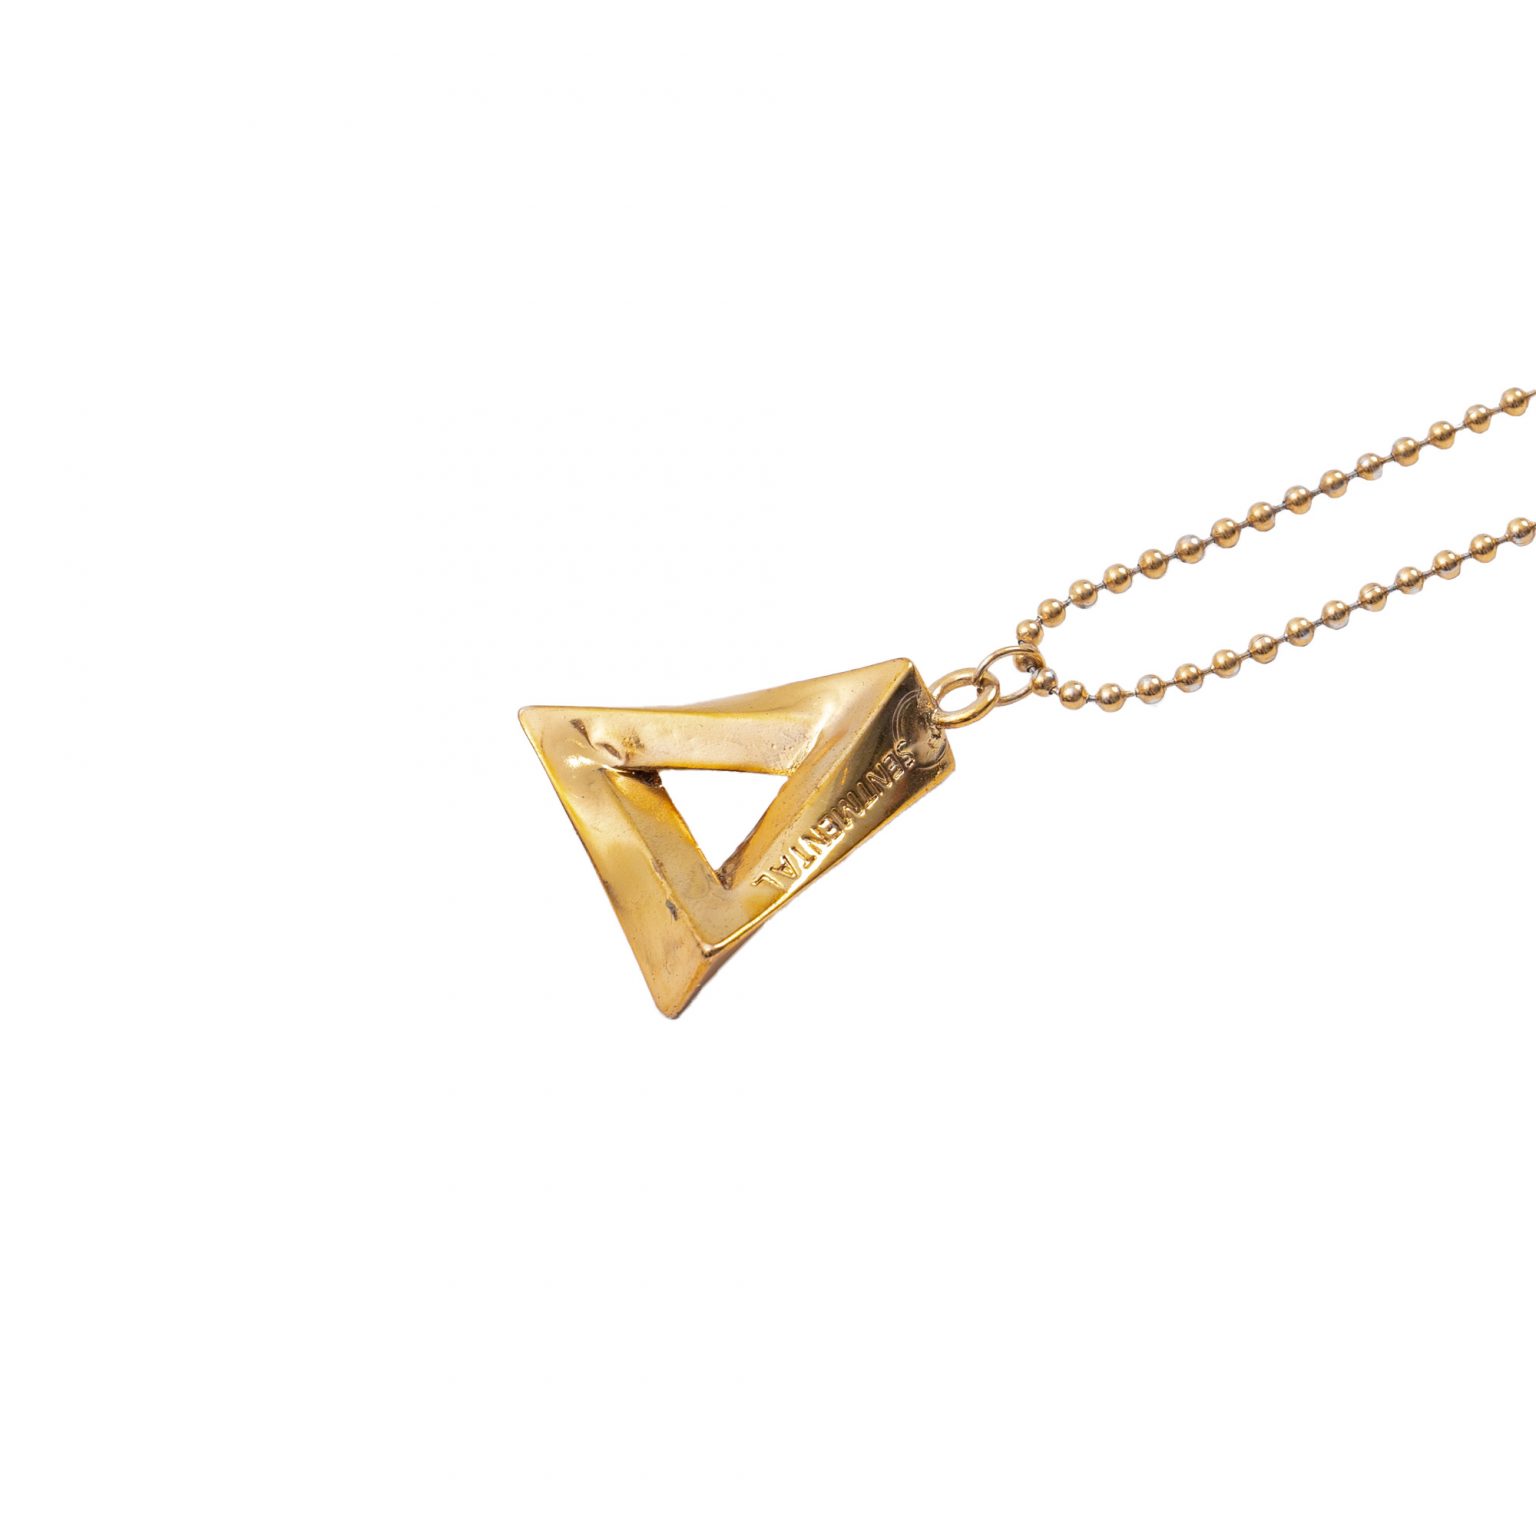 Penrose Triangle Gold – Super Sentimental Secret Theory